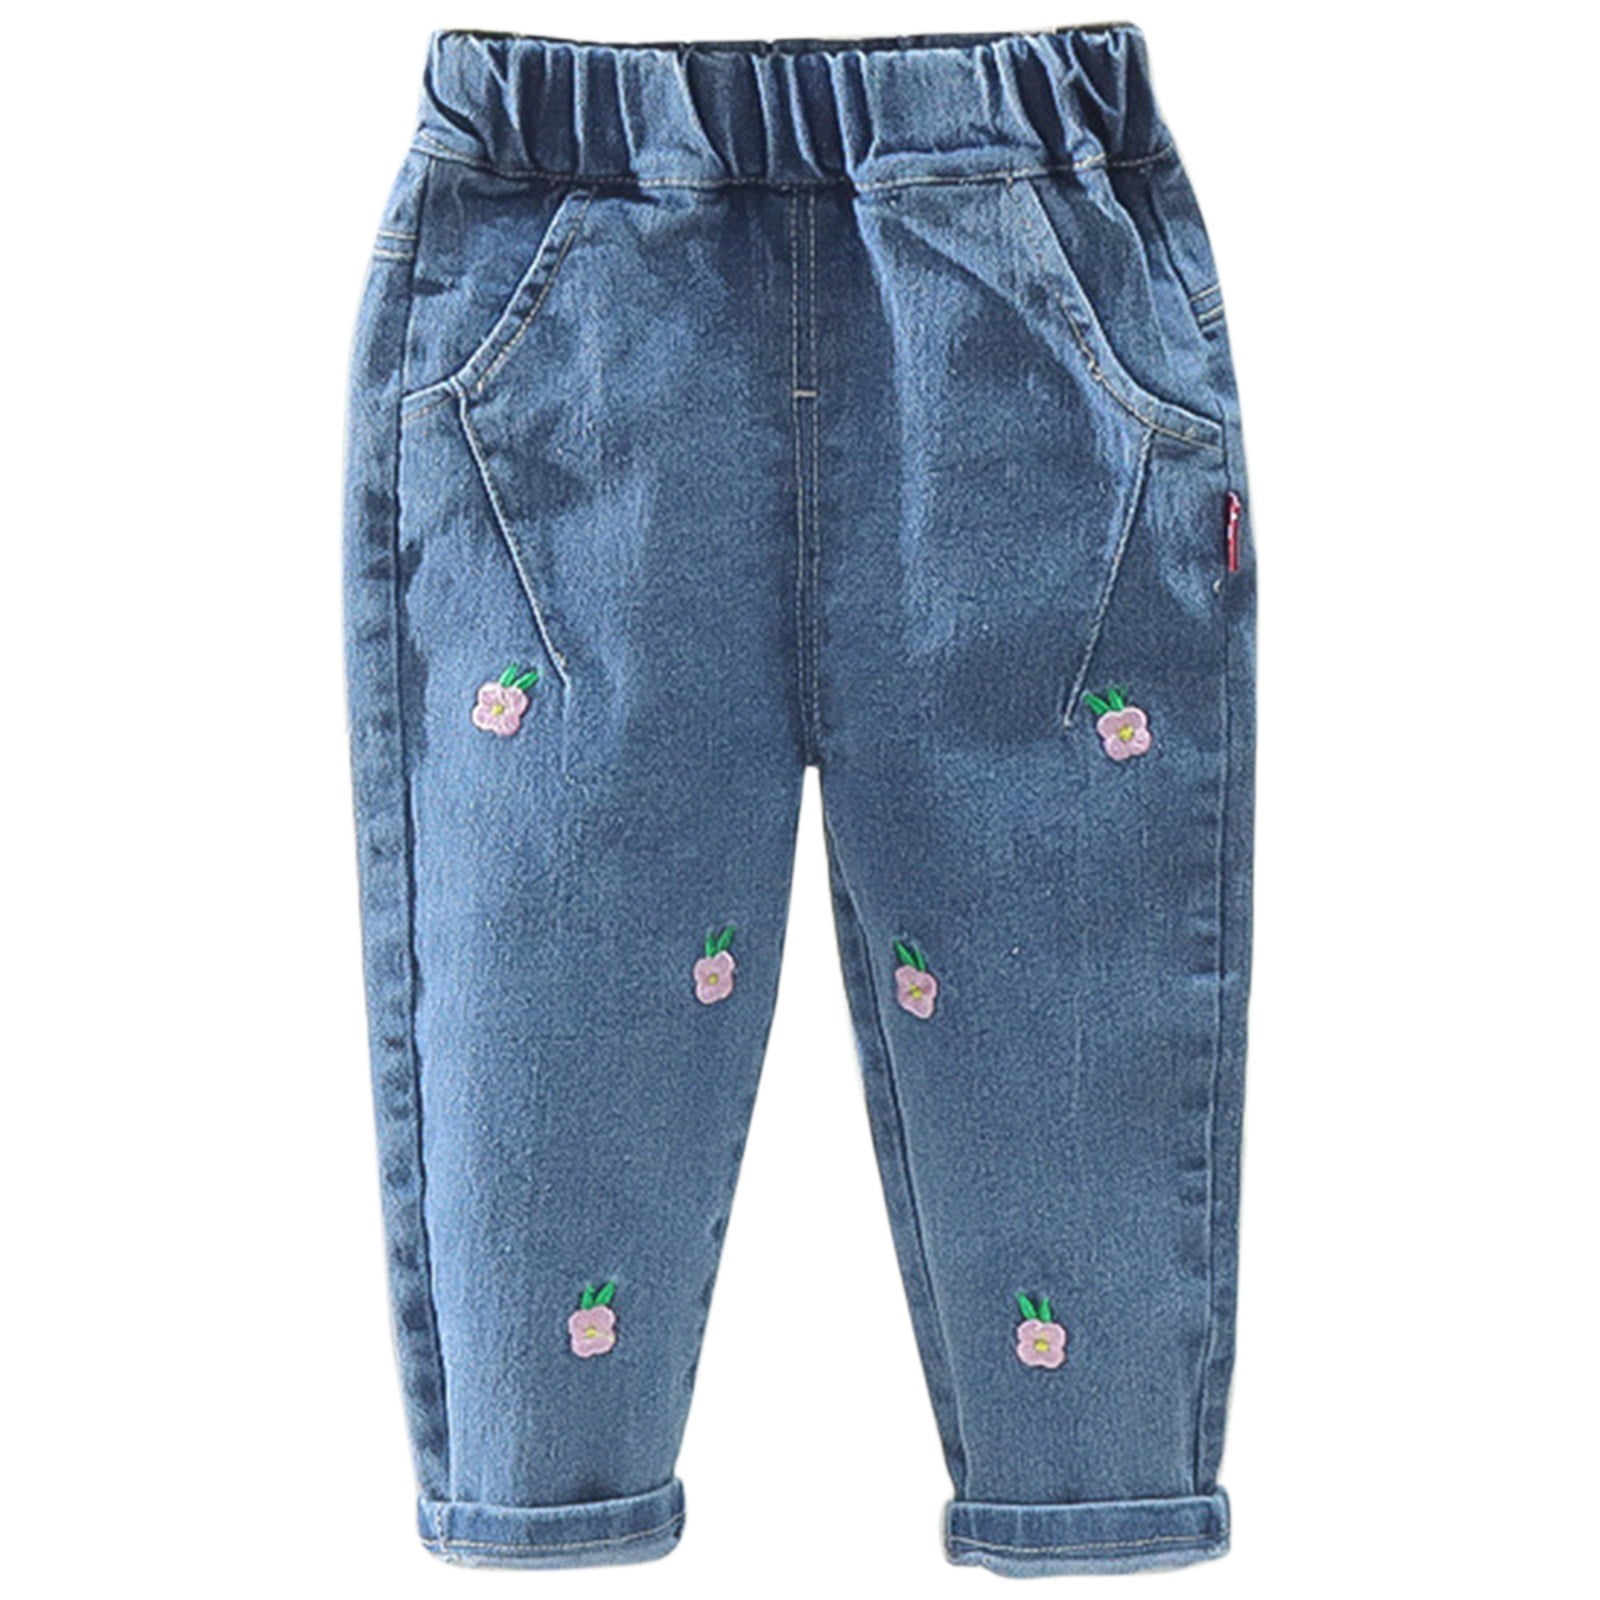 Pedort Jeans For Girls Stretch Toddler Girl Jeans Baby Girls Bell ...